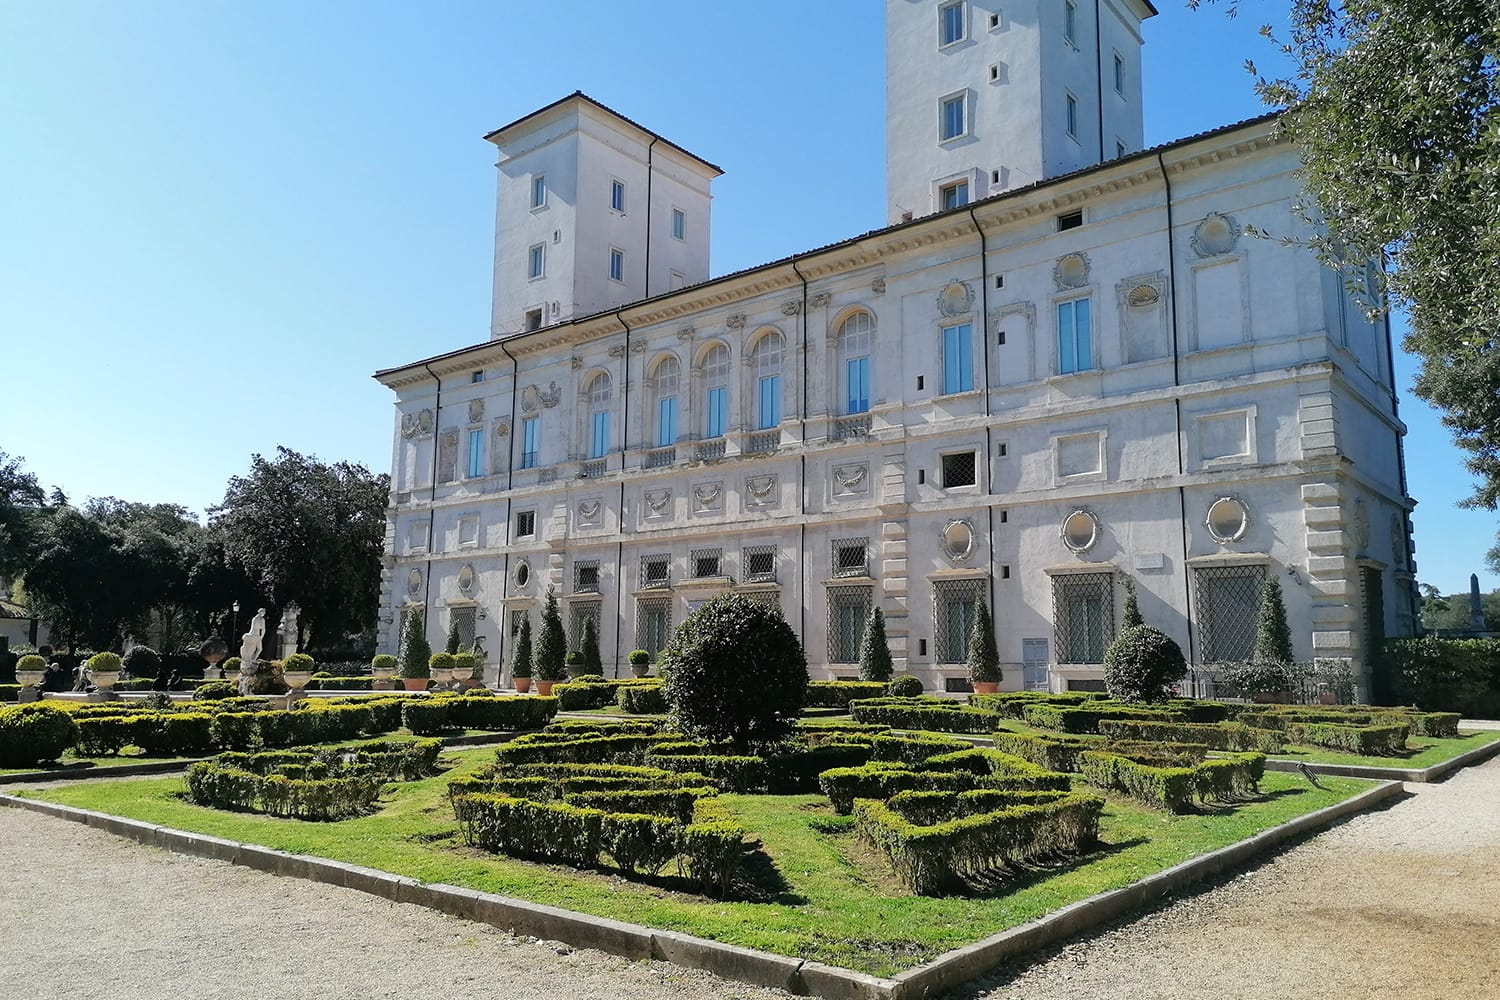 View of the rear facade of the Galleria Borghese inside the public park of Villa Borghese.